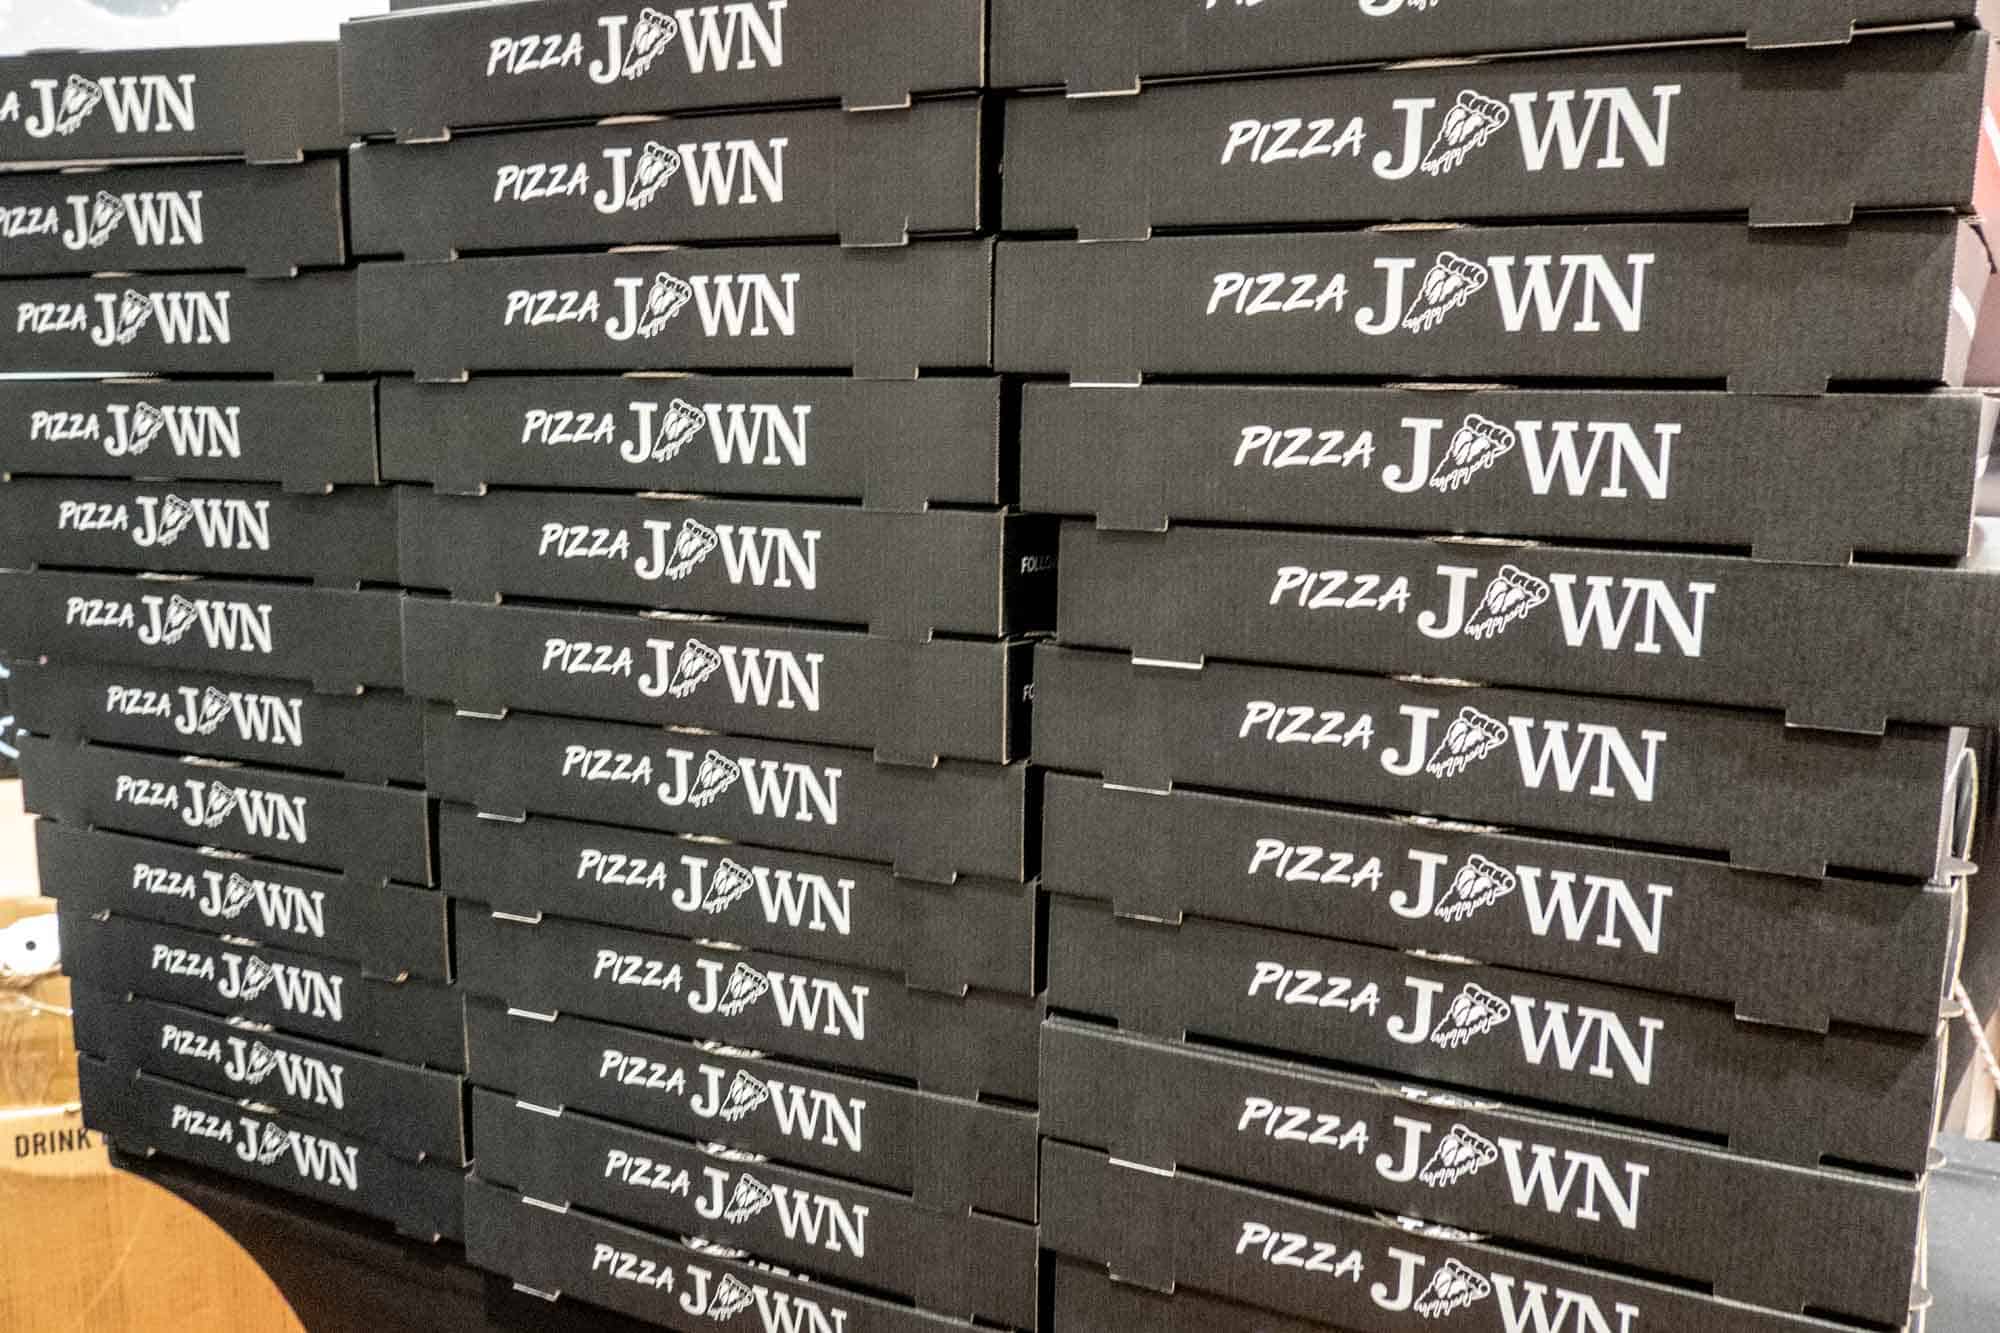 Pizza box saying "Pizza Jawn"